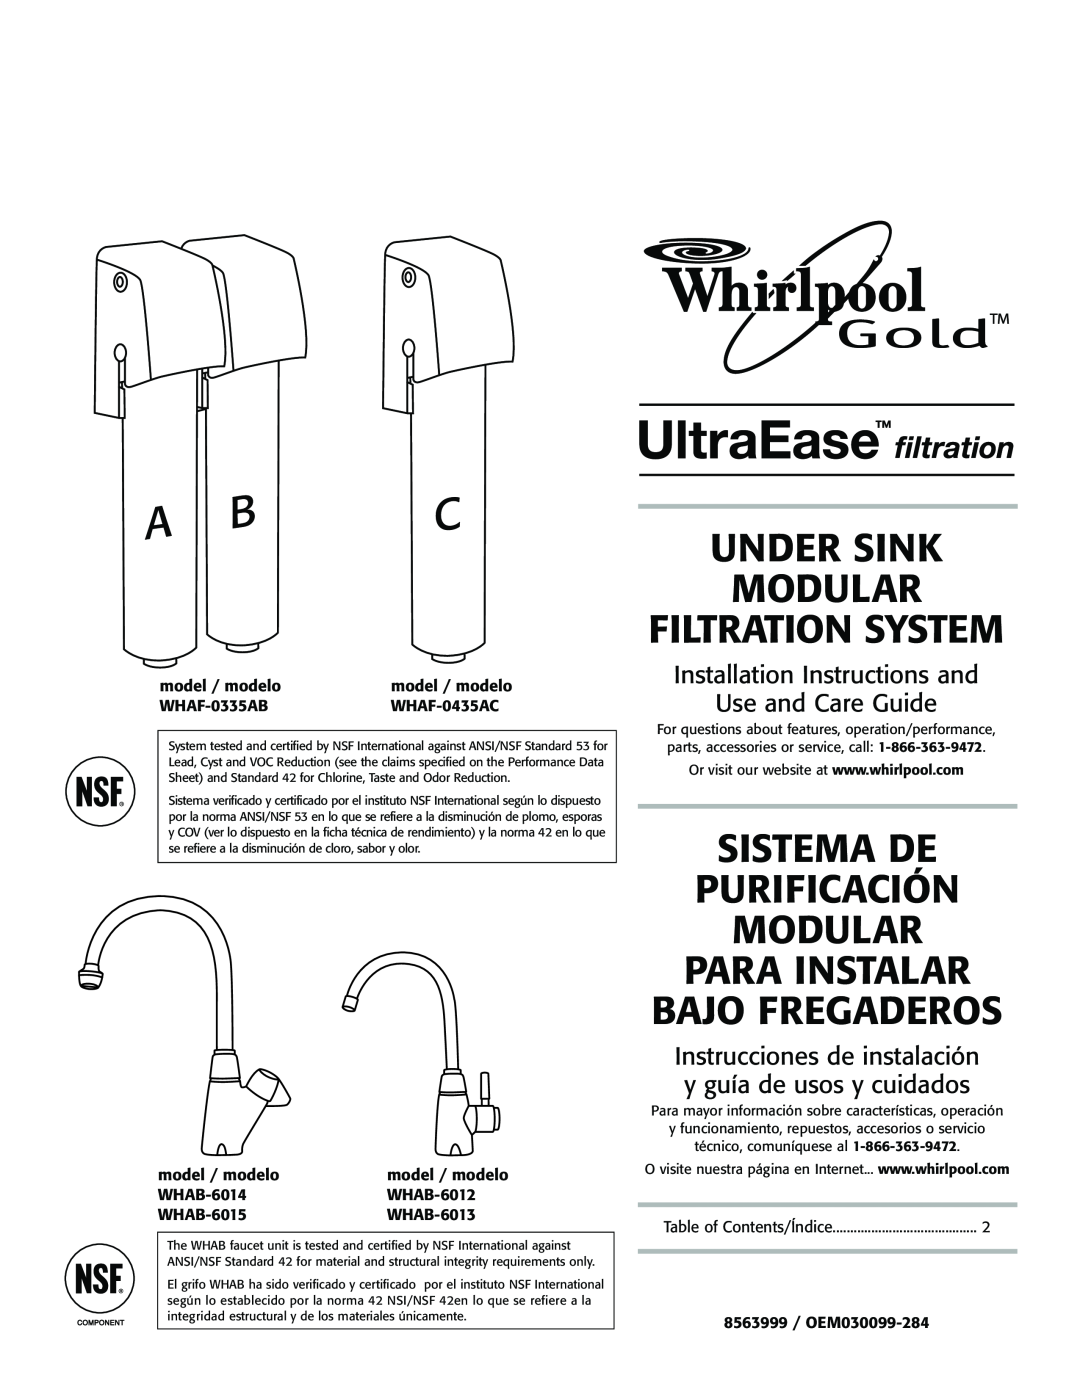 Whirlpool WHAB-6013, WHAB-6015, WHAB-6014 installation instructions Under Sink Modular Filtration System, Bajo Fregaderos 